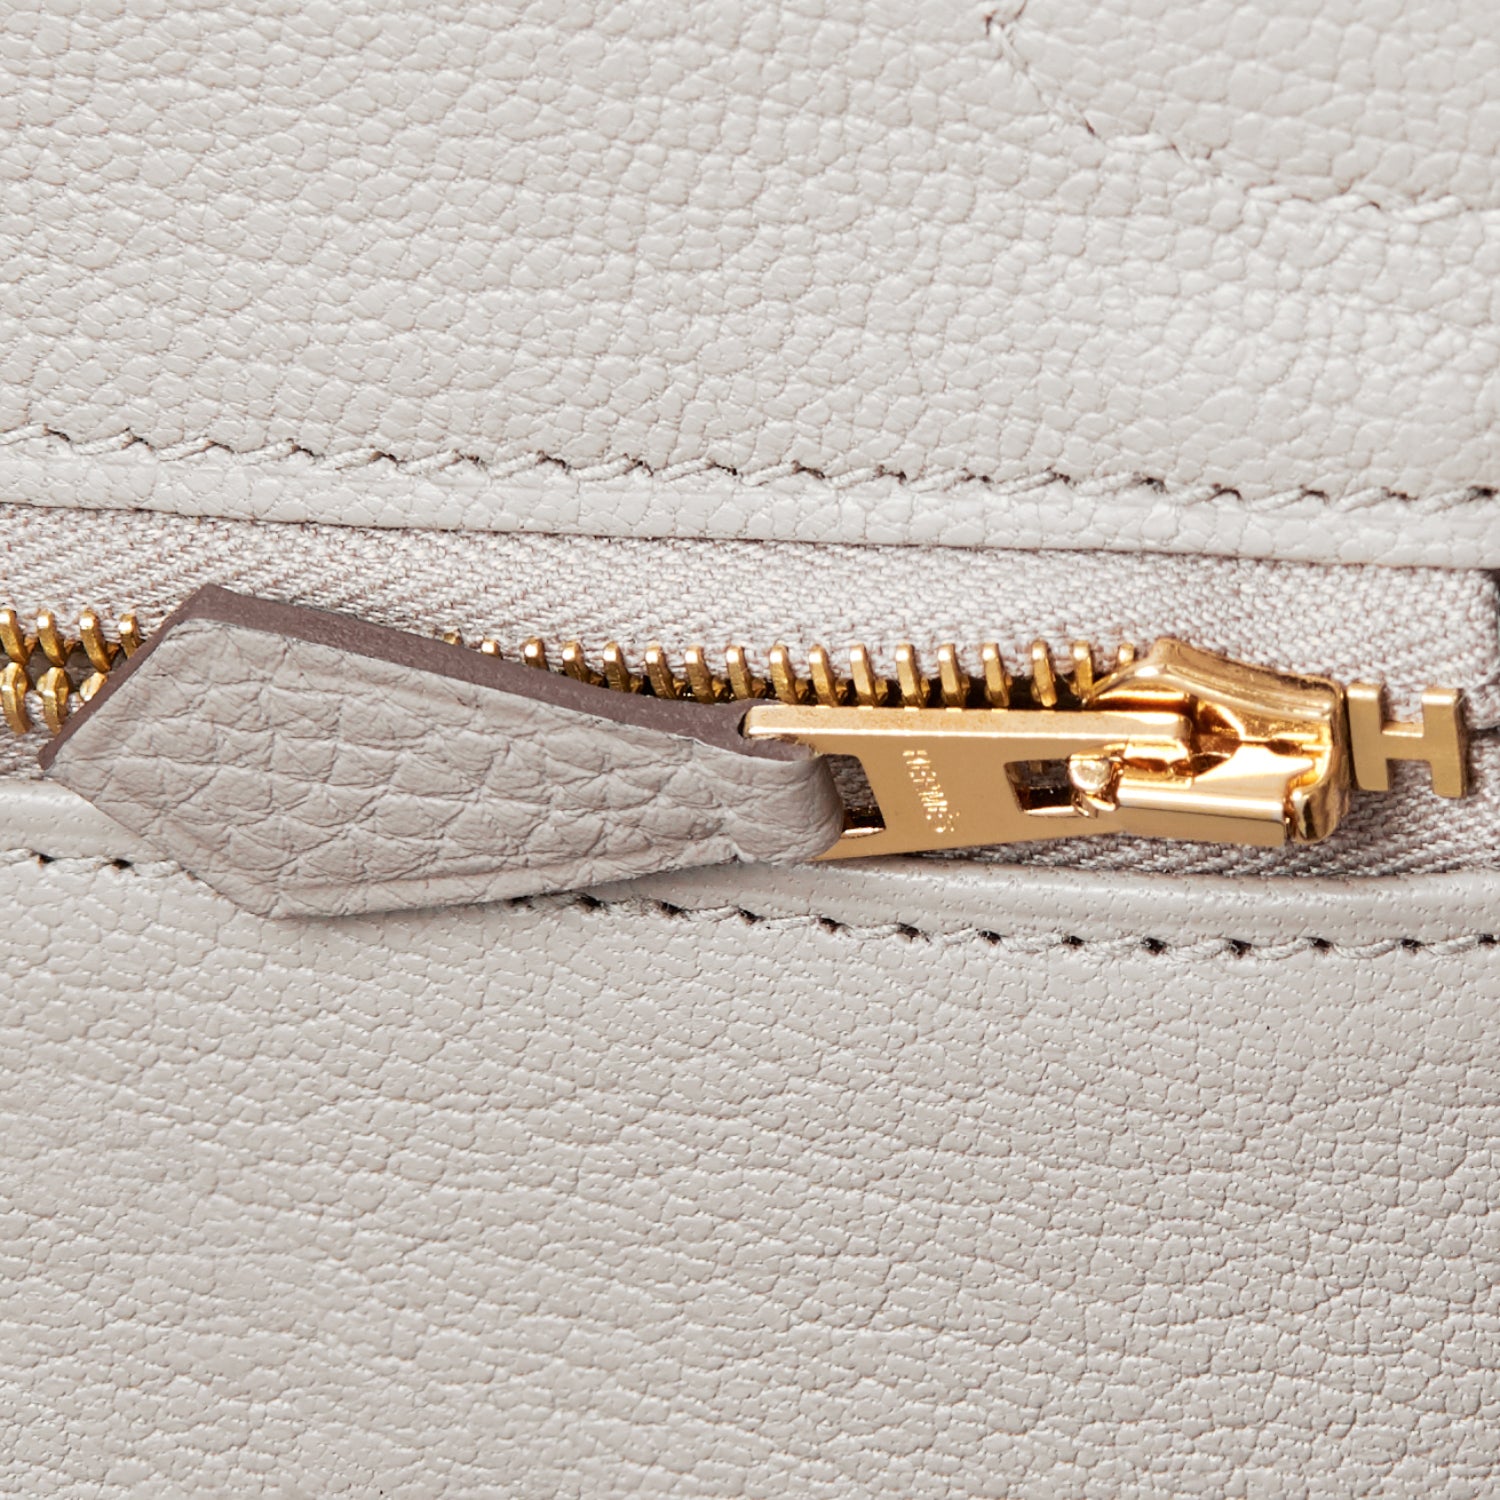 Hermès Birkin 30cm Veau Togo Gris Tourterelle Gold Hardware – SukiLux